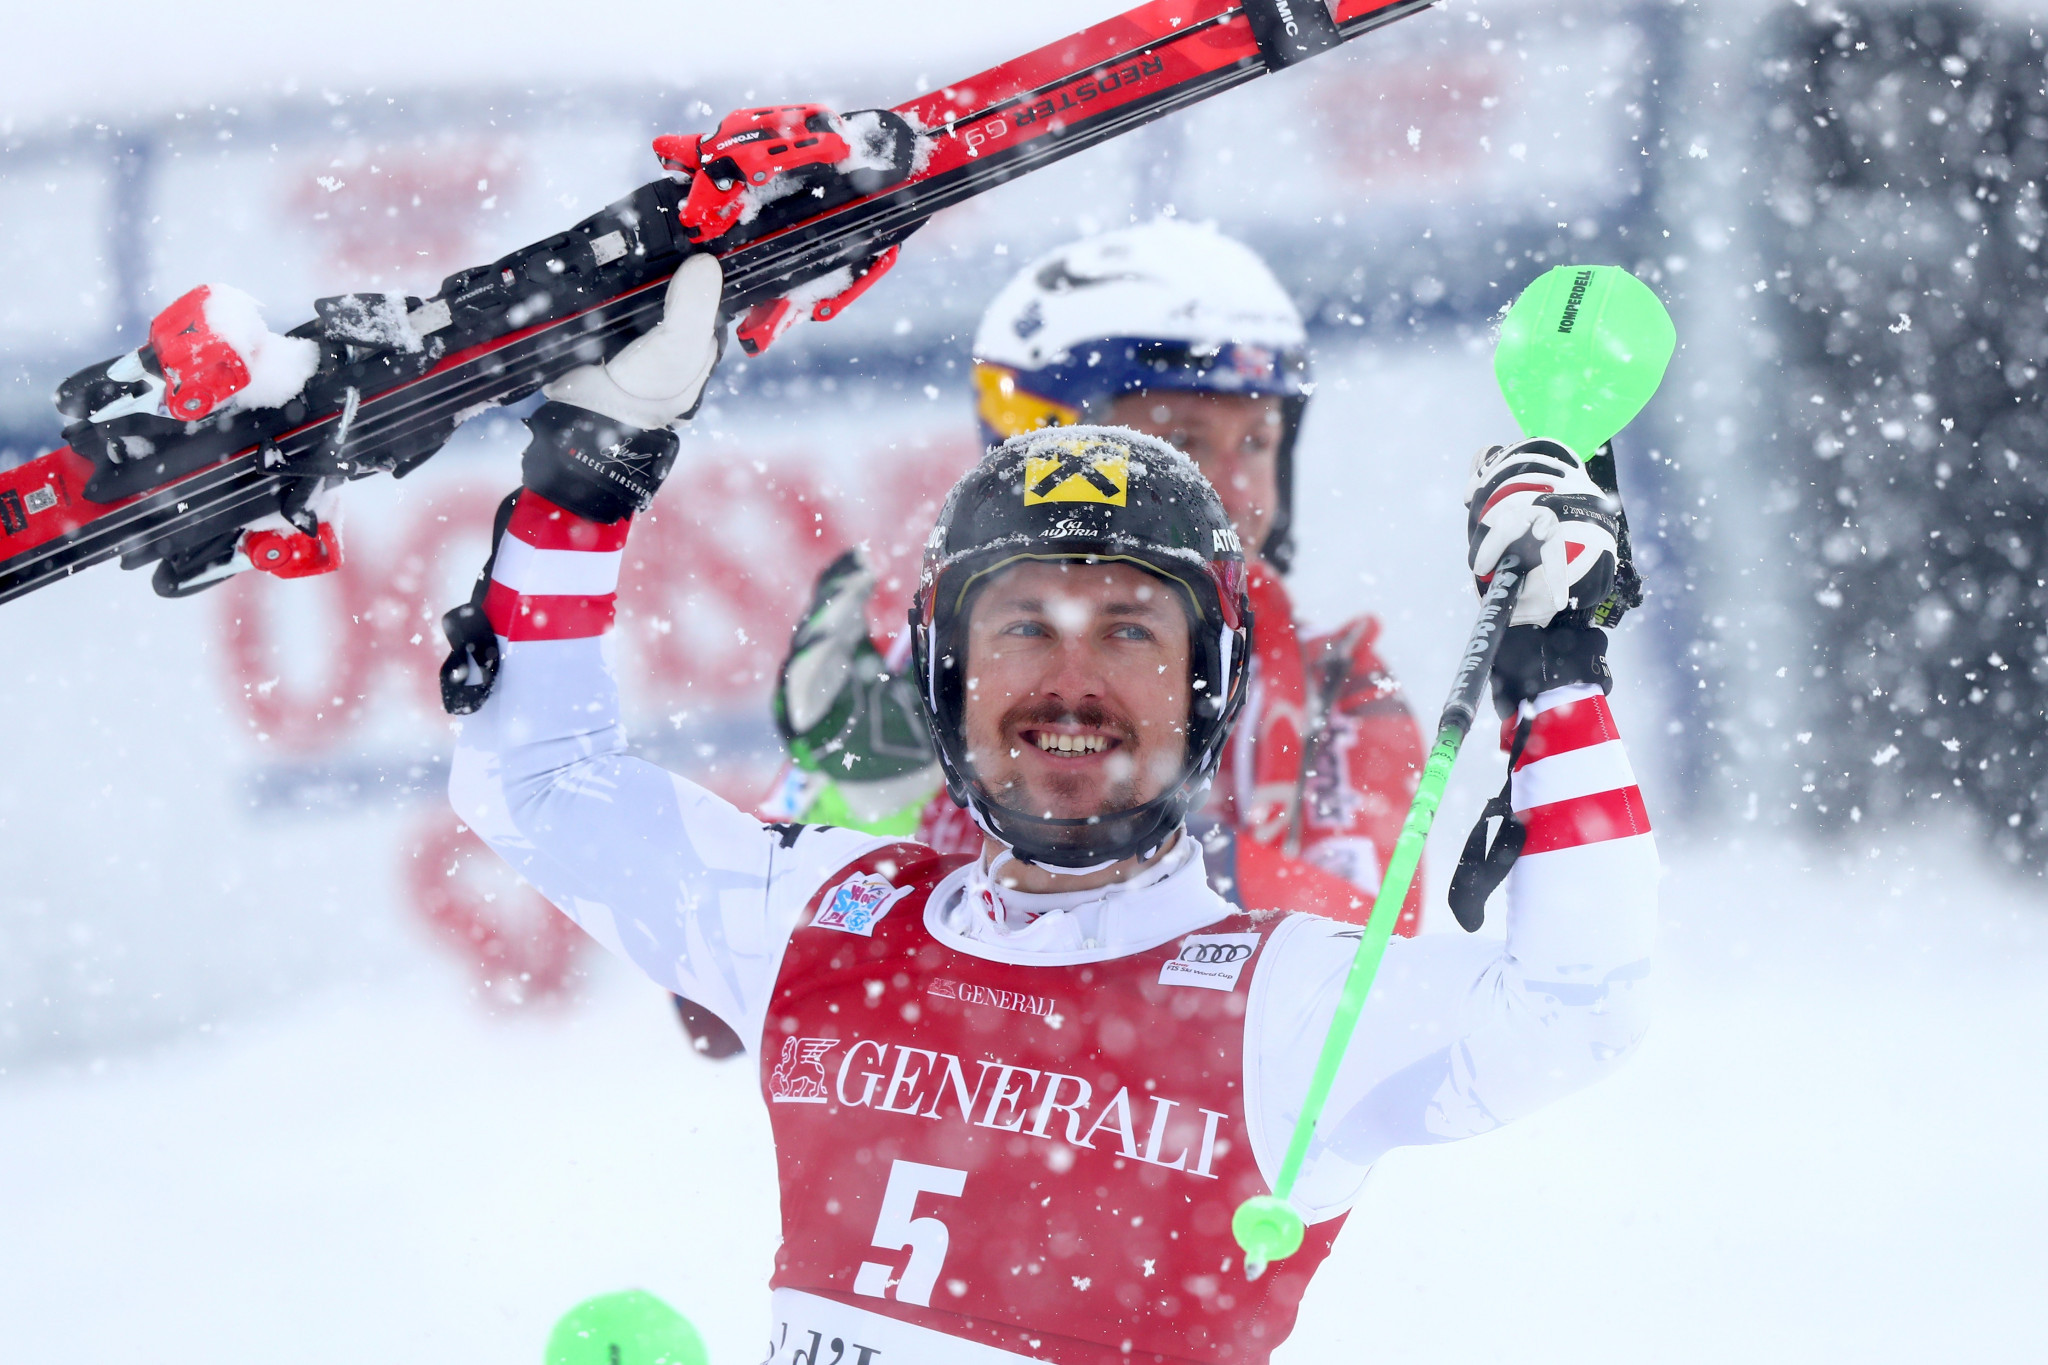 Marcel Hirscher, of Austria, celebrates winning the Audi FIS Alpine Ski World Cup Men's Slalom in Val-d'Isere, France ©Getty Images